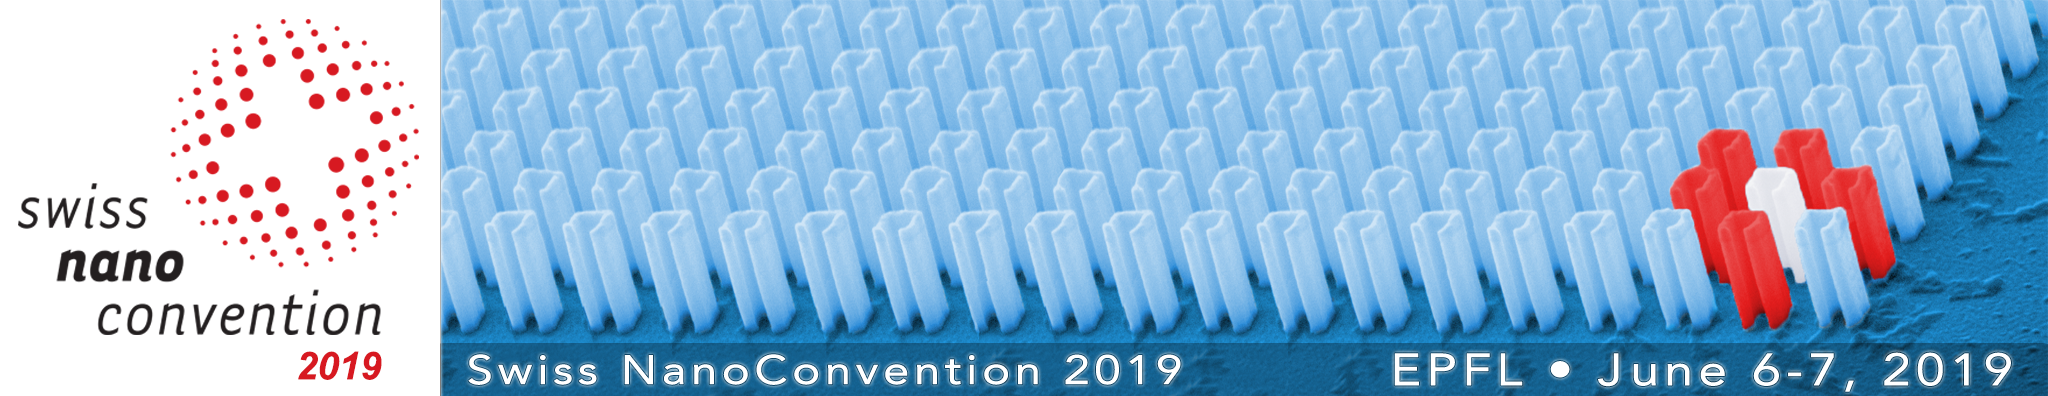 Swiss NanoConvention 2019